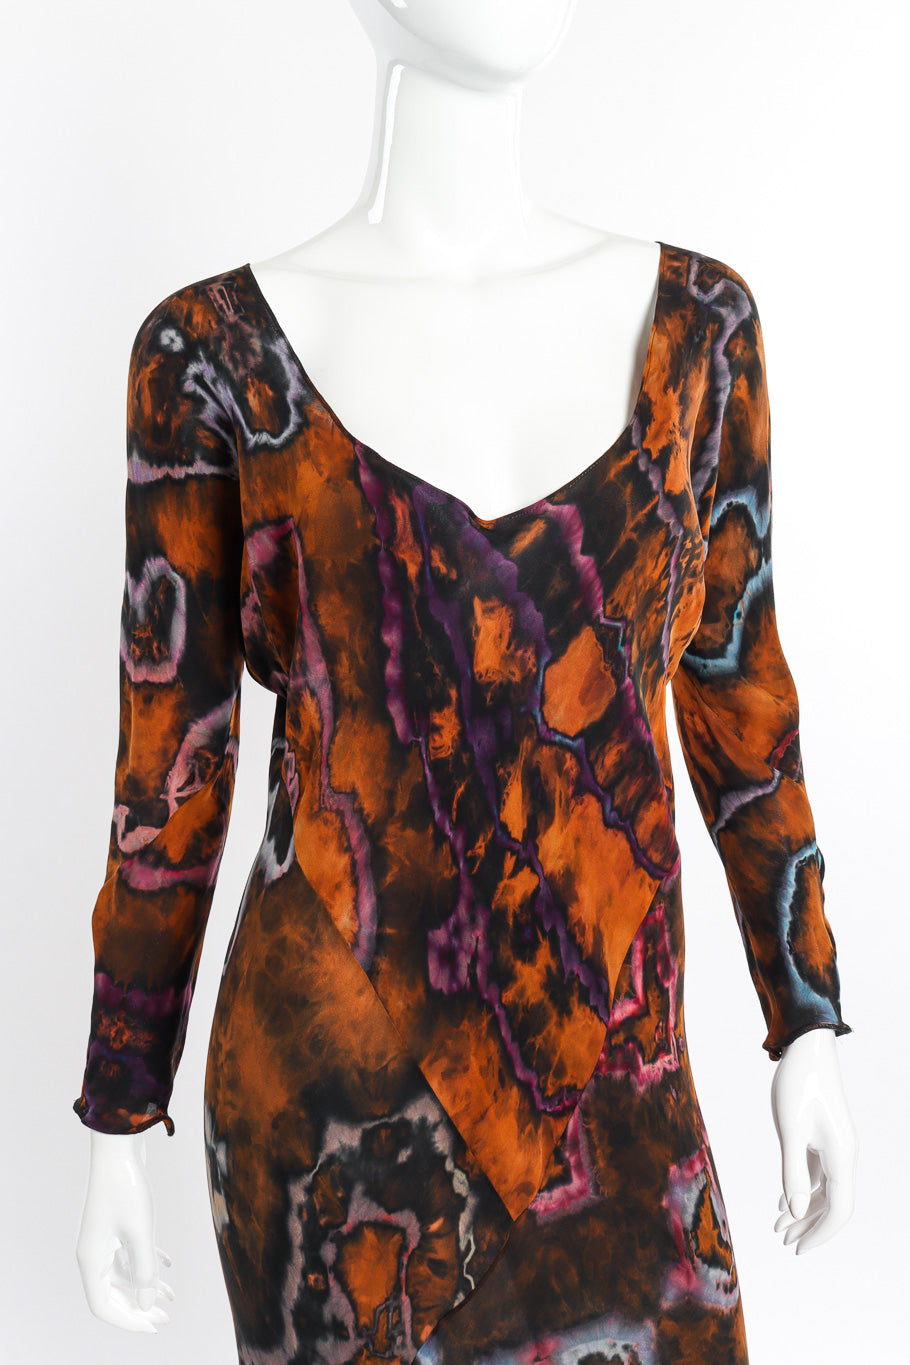 Silk Tie-Dye Bias Dress by Carter Smith on mannequin chest @recessla